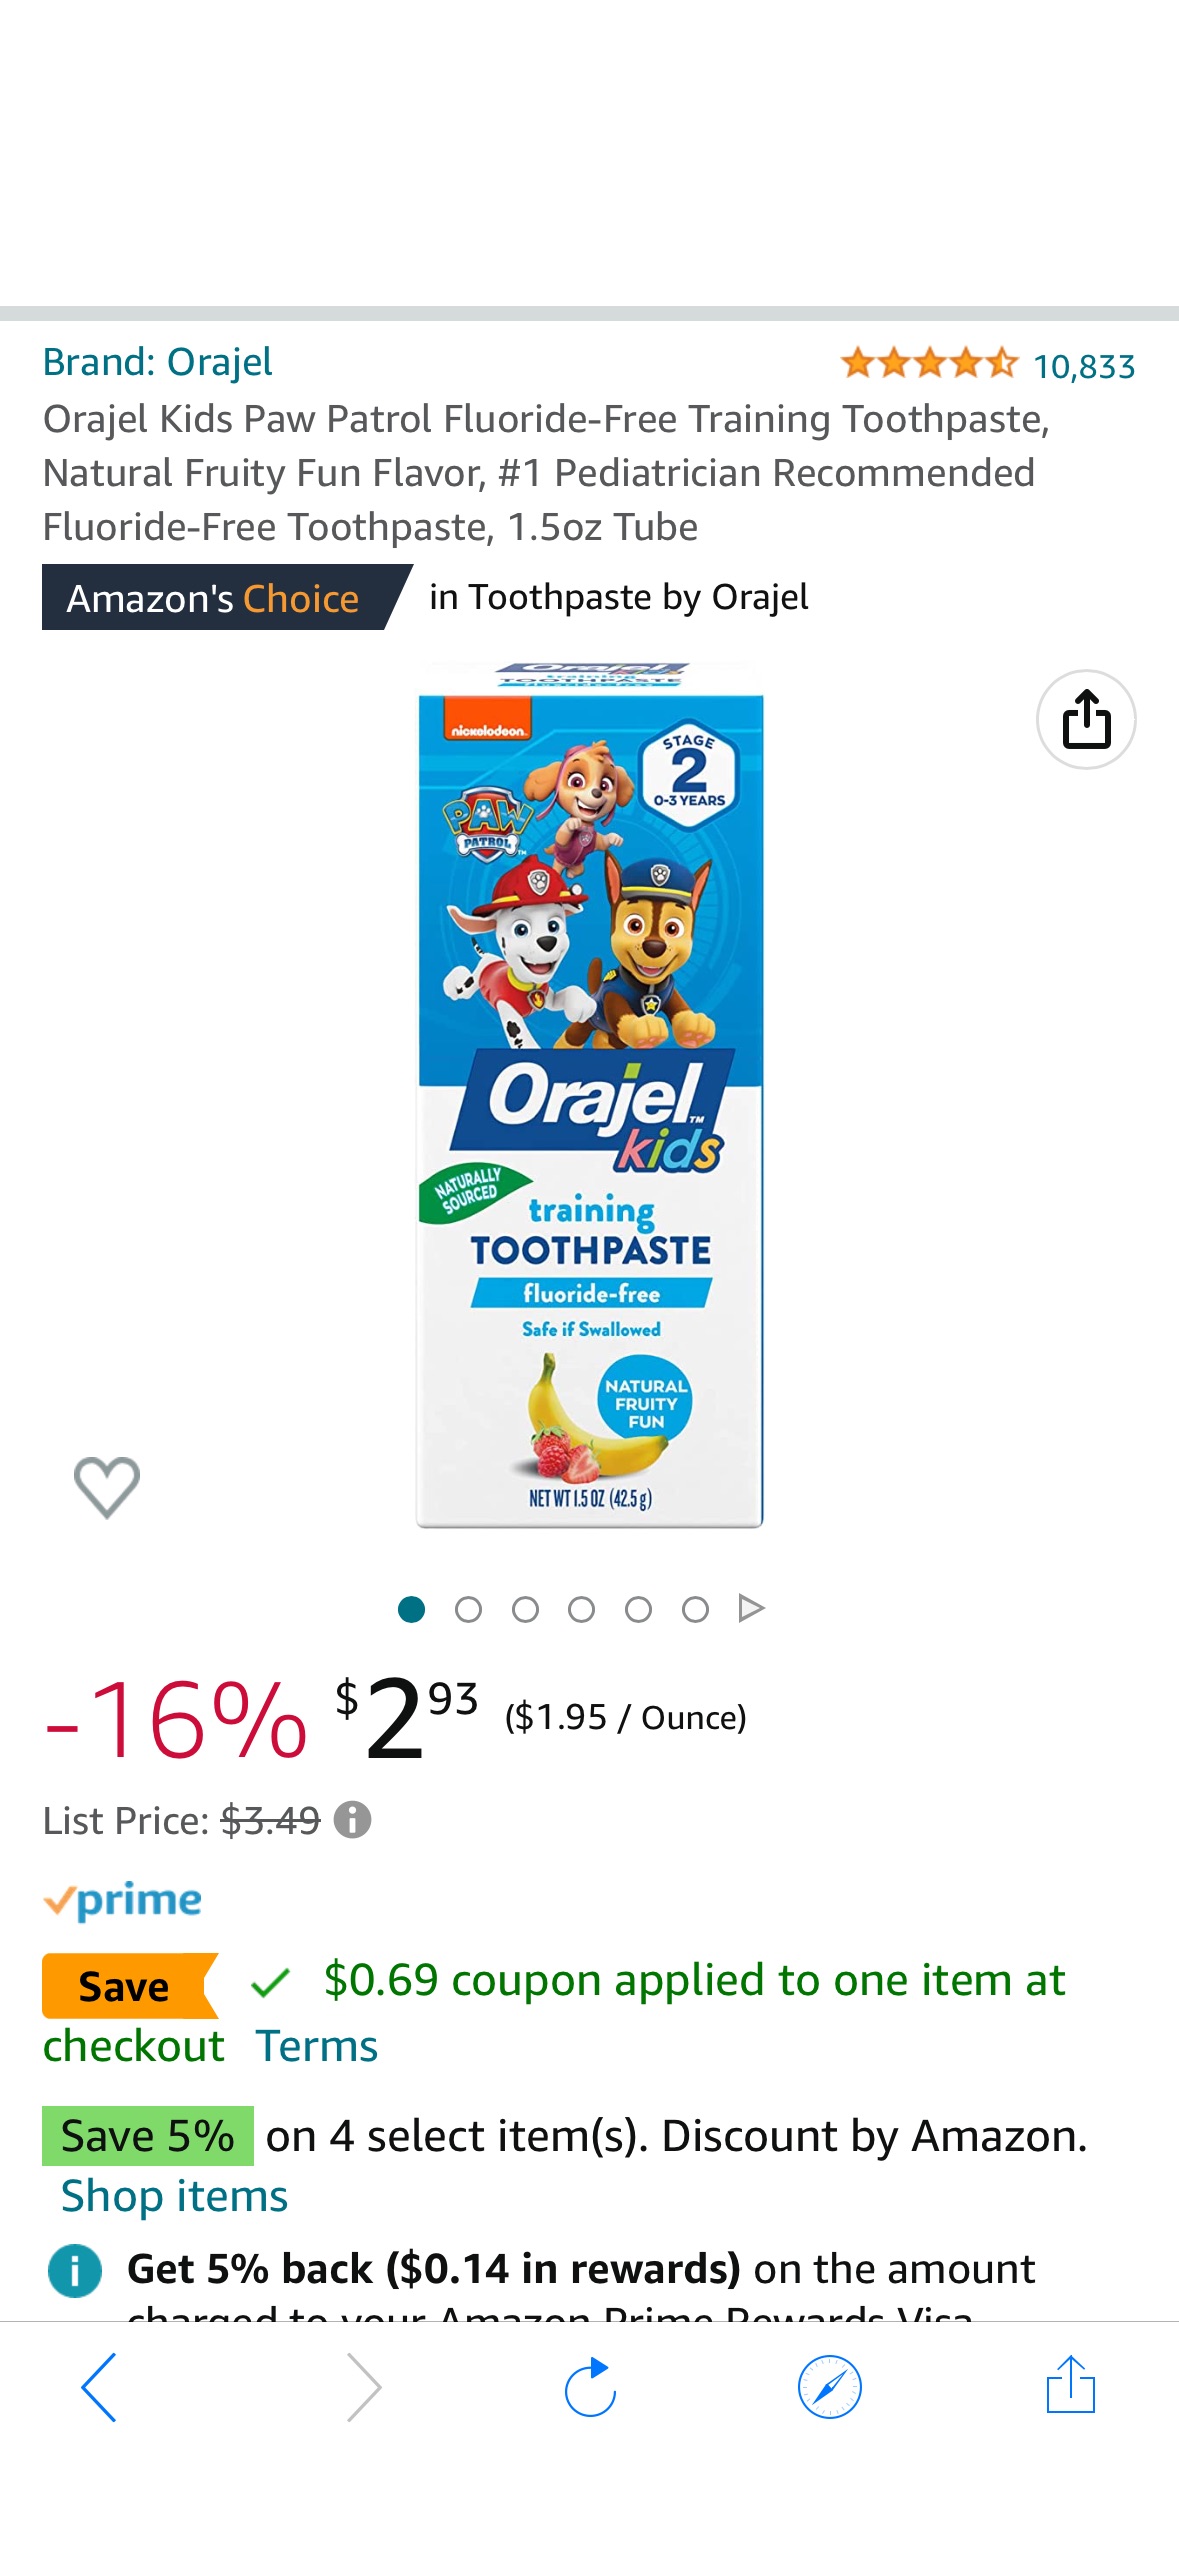 Amazon.com : Orajel Kids Paw Patrol Fluoride-Free Training Toothpaste, Natural Fruity Fun Flavor, #1 Pediatrician Recommended Fluoride-Free Toothpaste, 1.5oz Tube : Toothpaste Baby :儿童牙膏